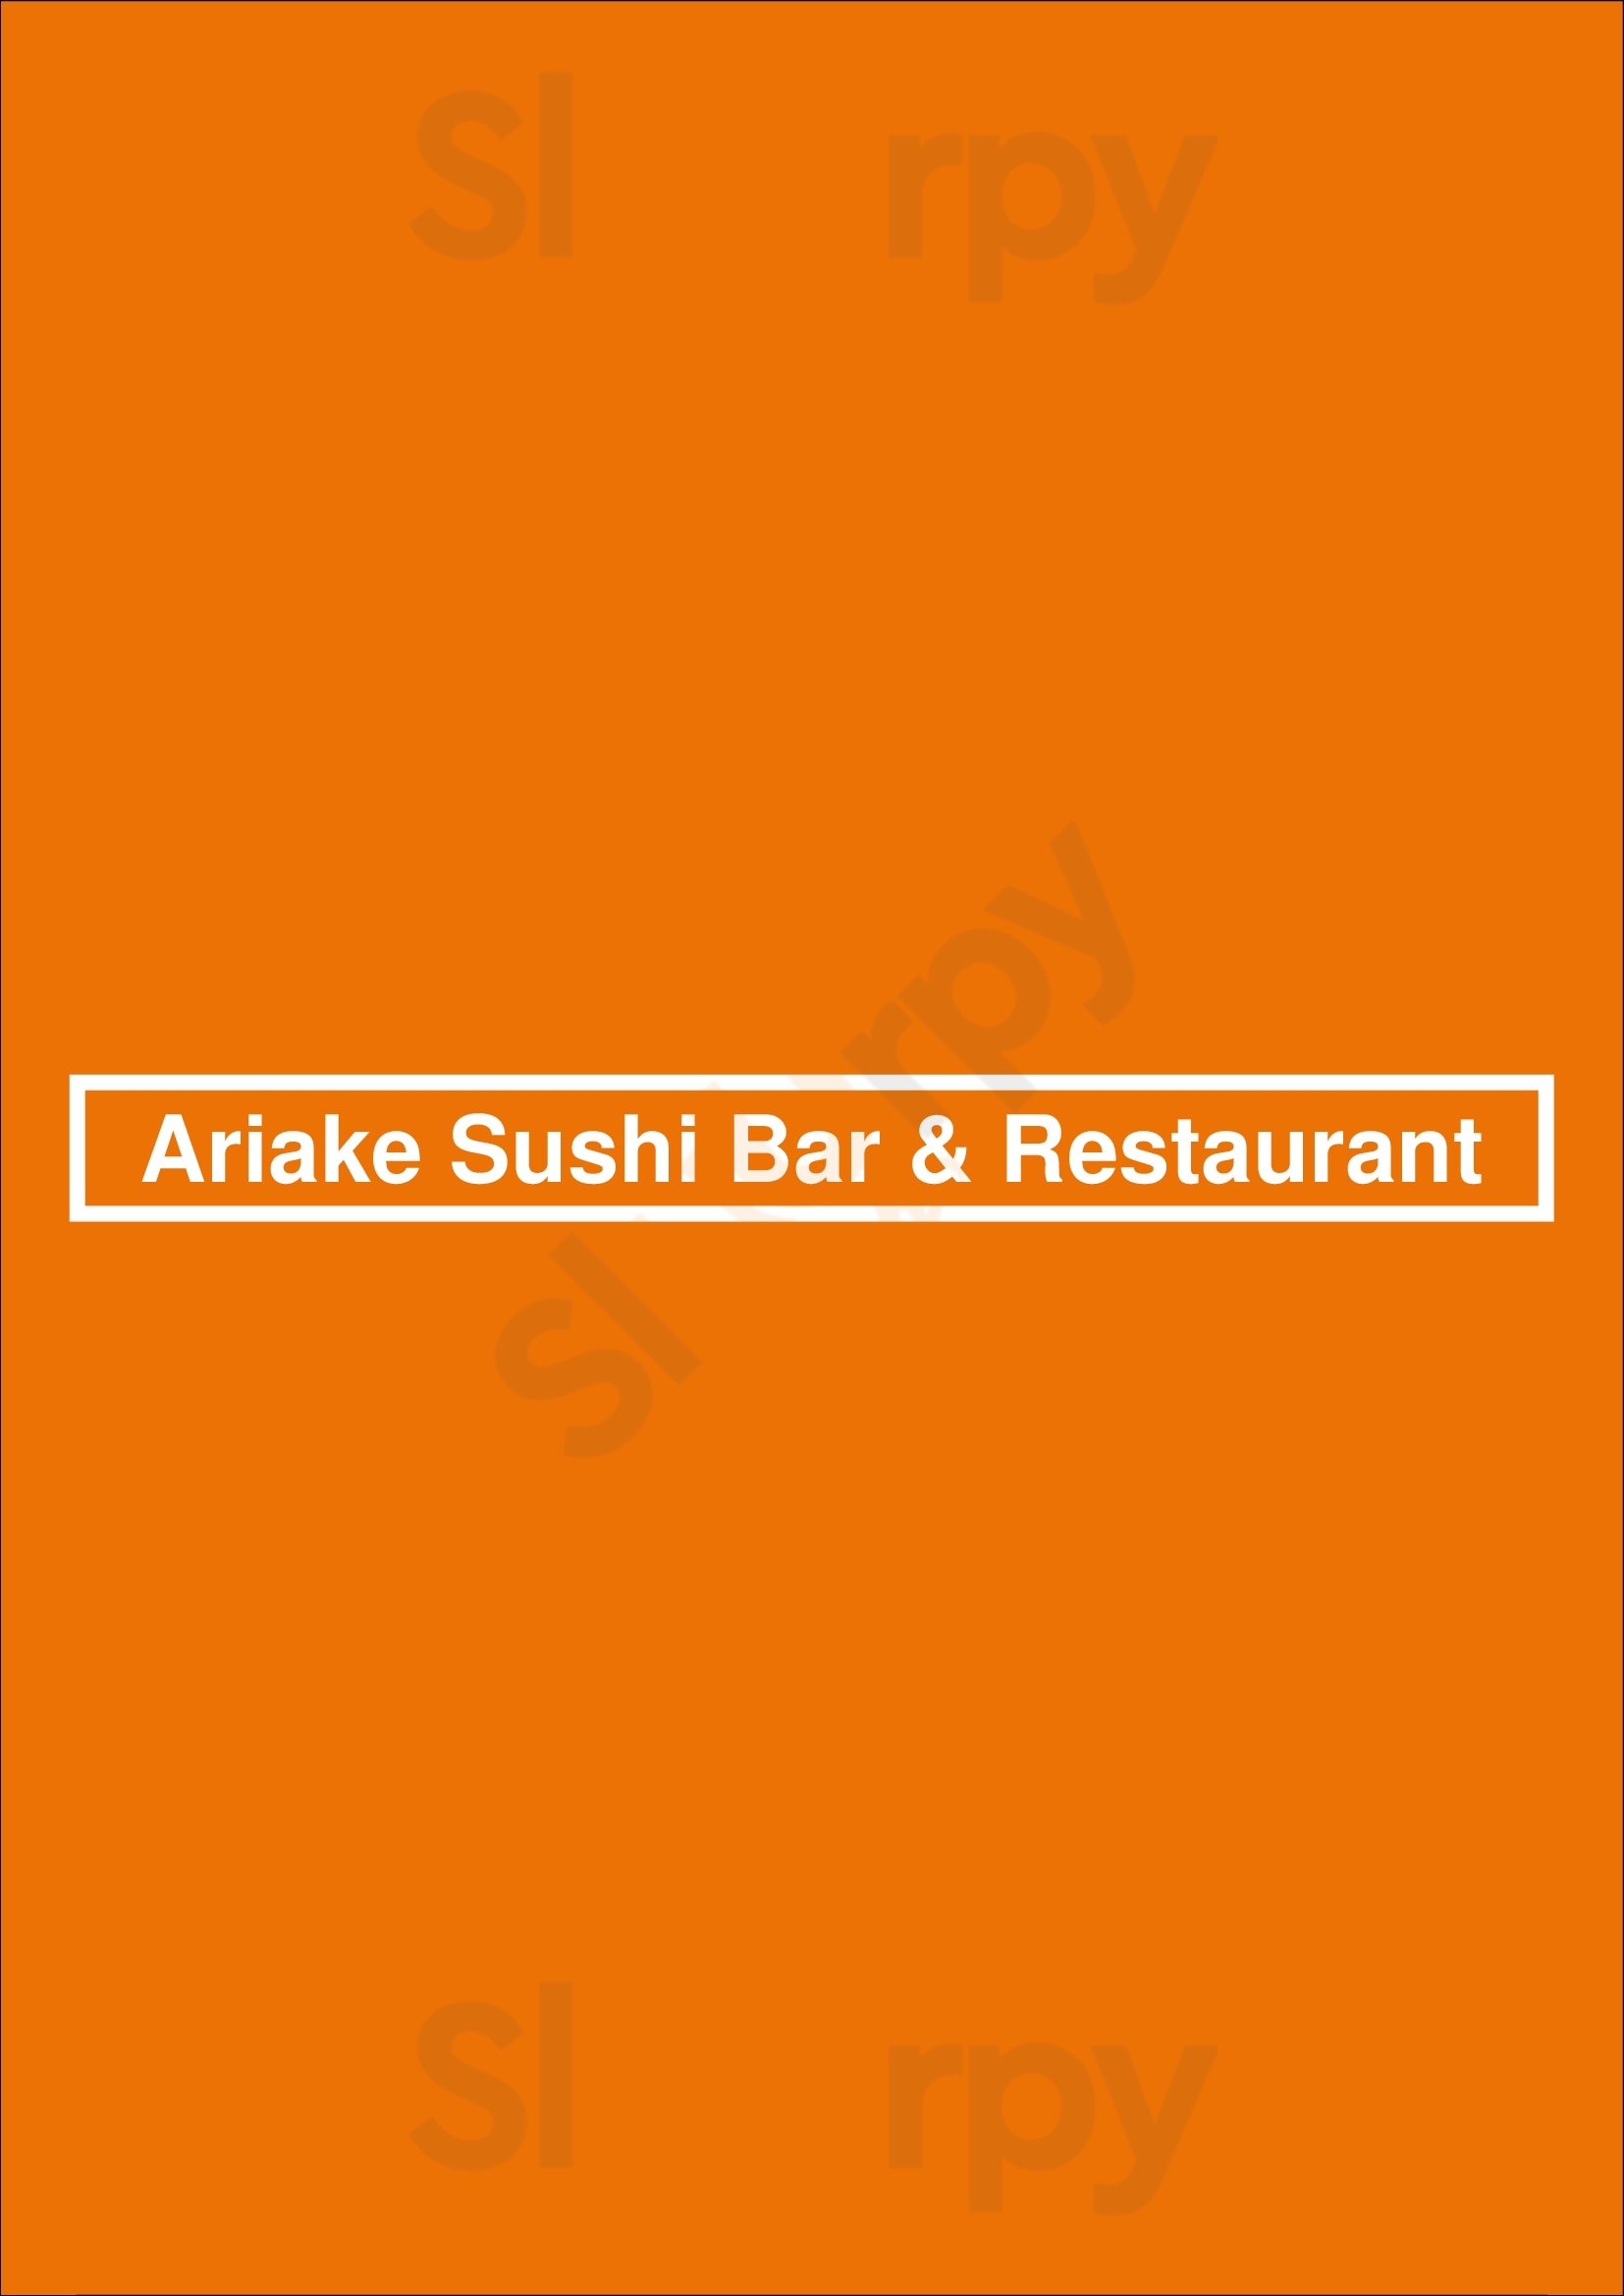 Ariake Sushi Bar & Restaurant Miamisburg Menu - 1